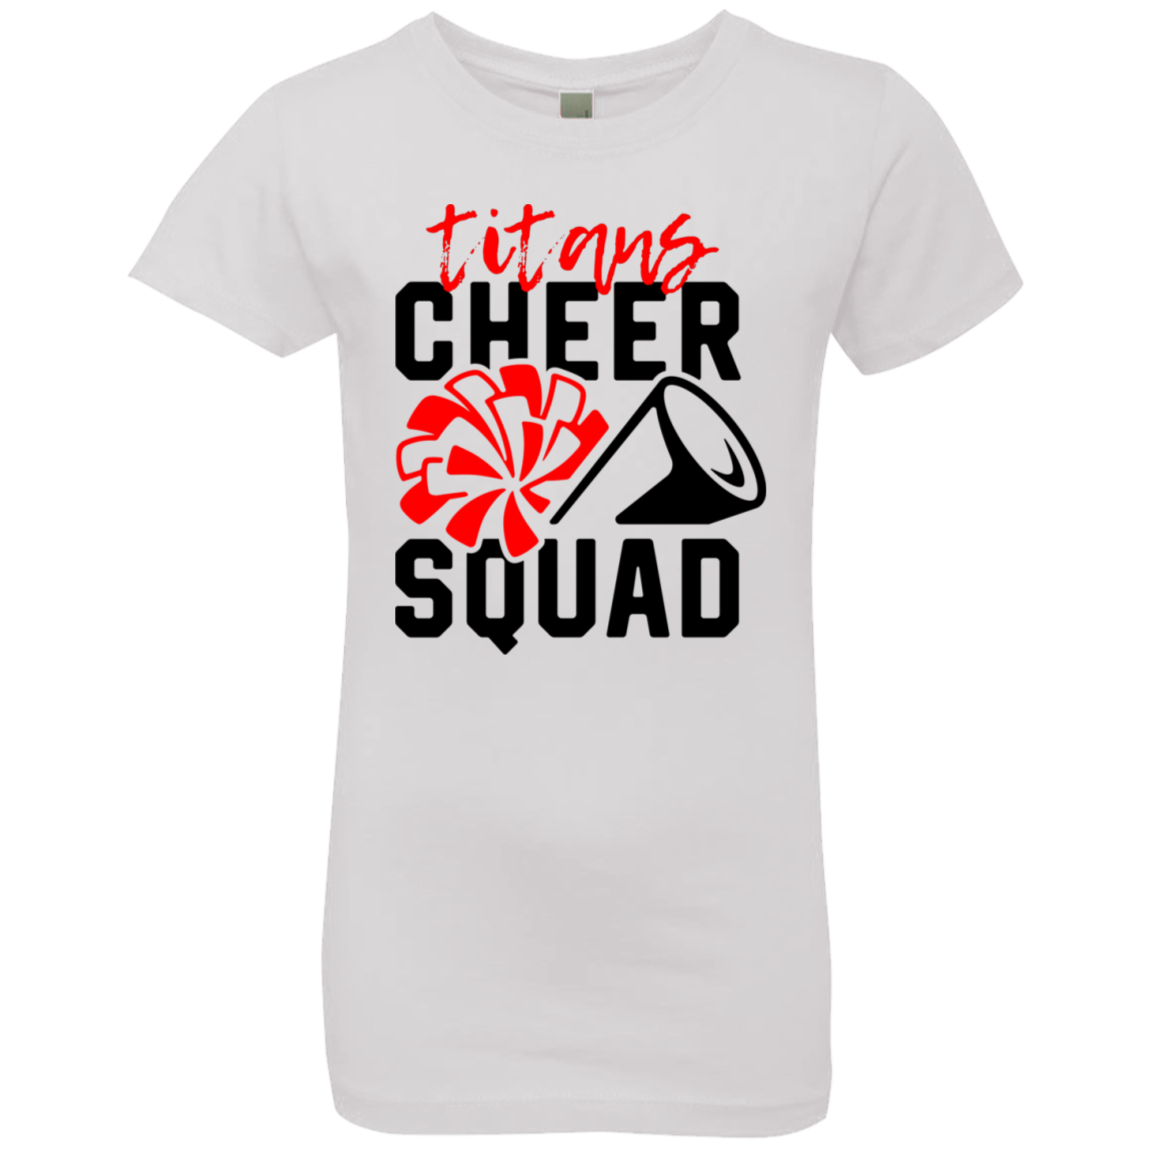 Titans Cheer Squad Girls' Princess T-Shirt